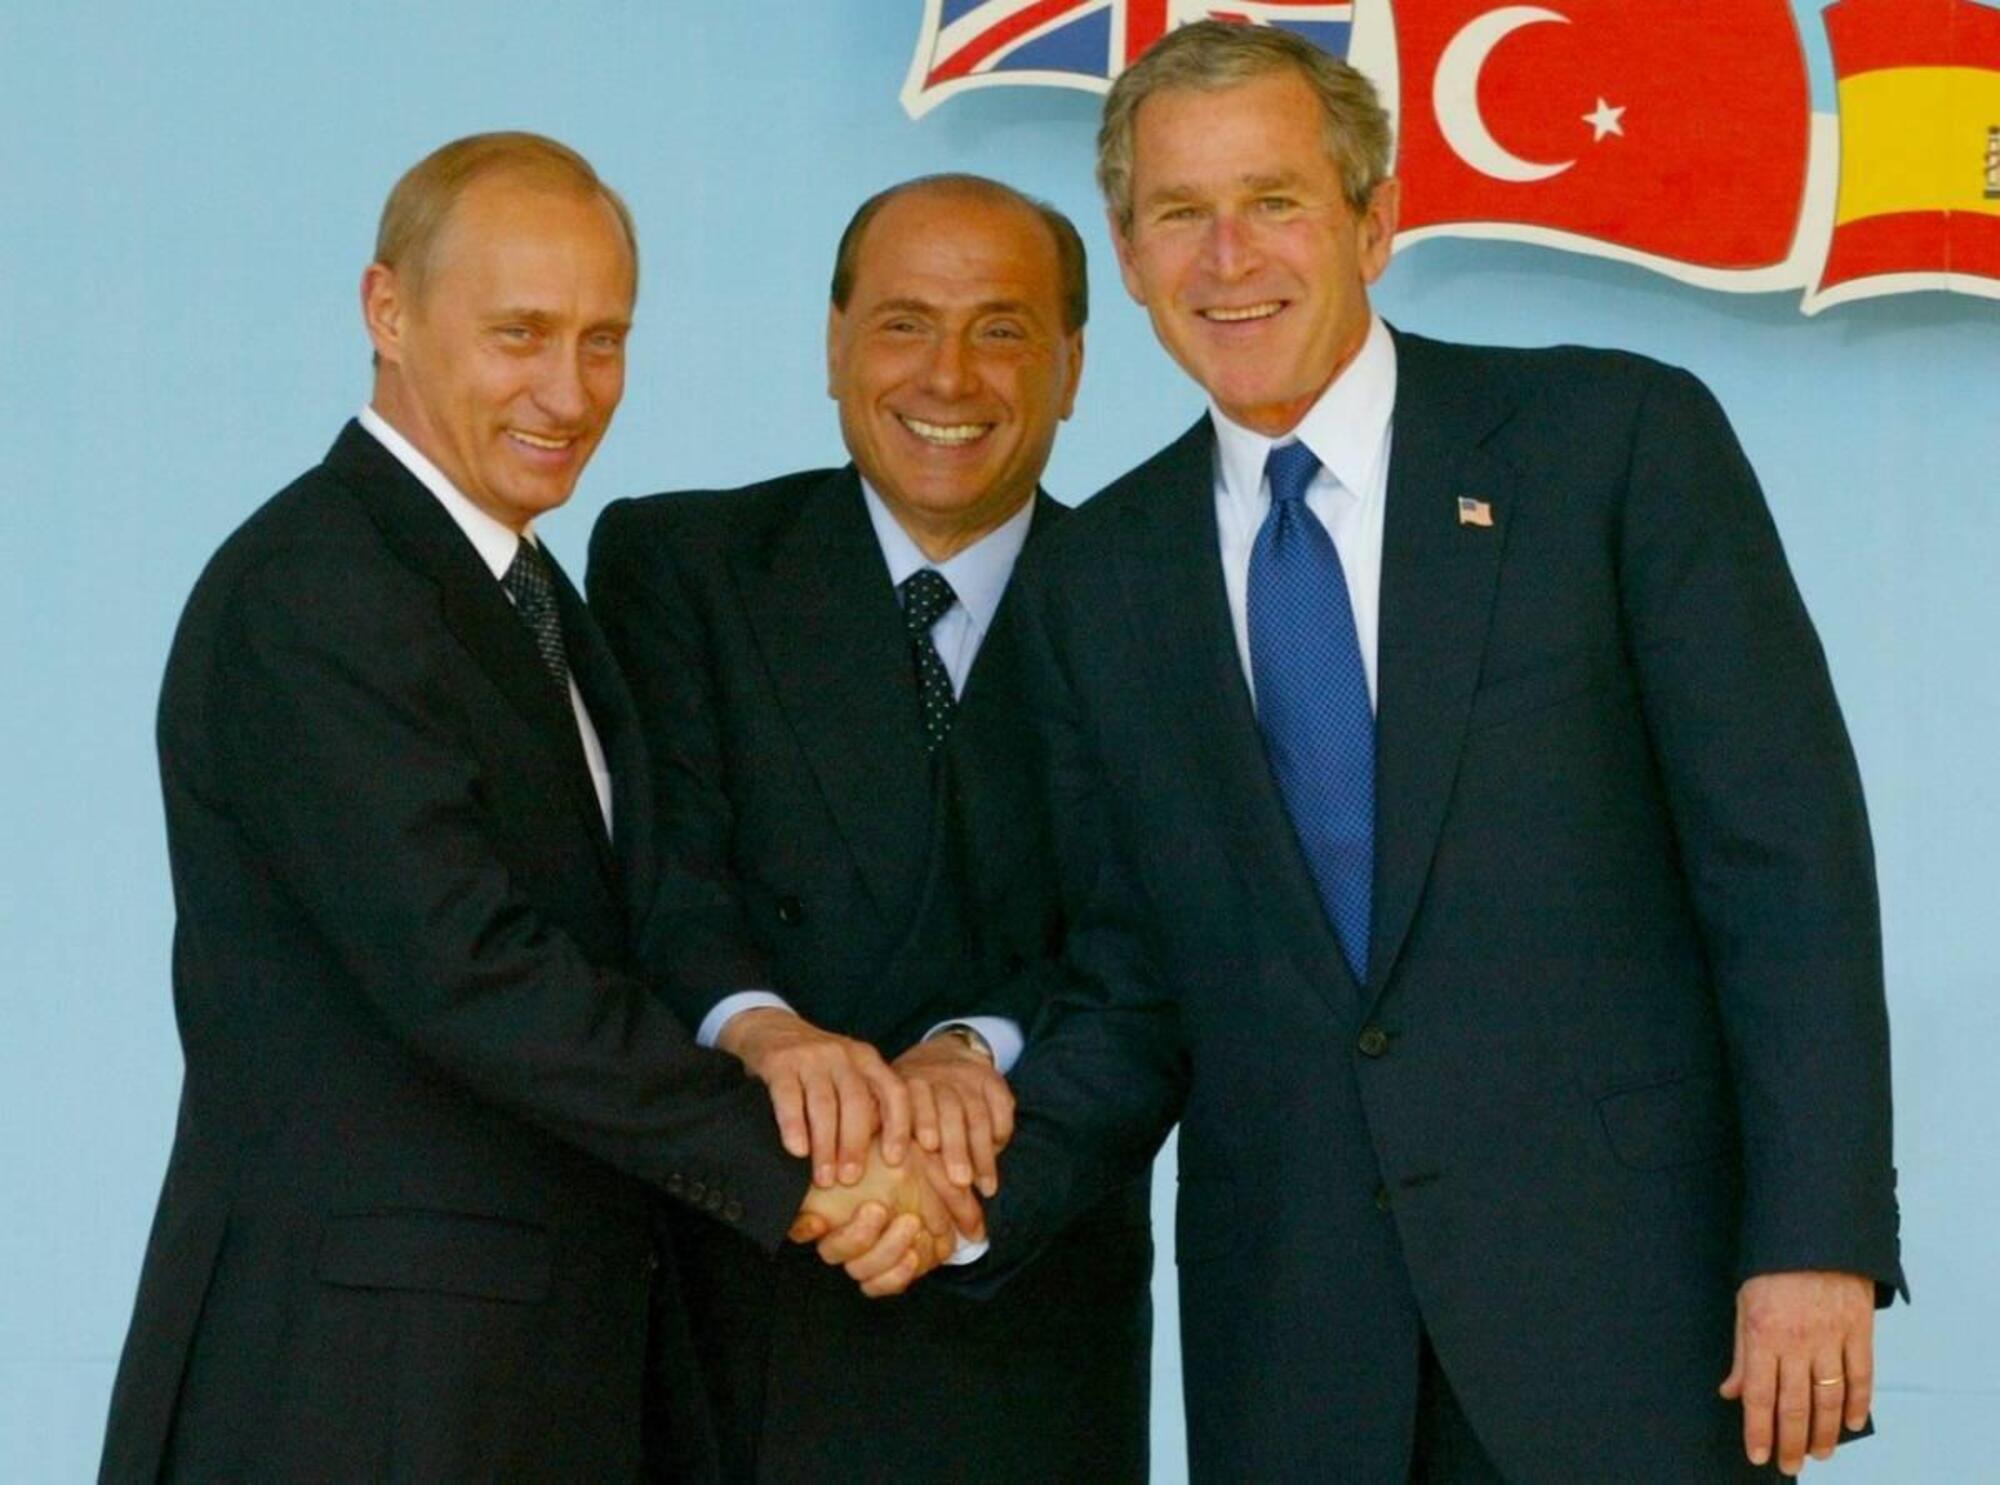 Berlusconi Putin Bush 2002 fine guerra fredda